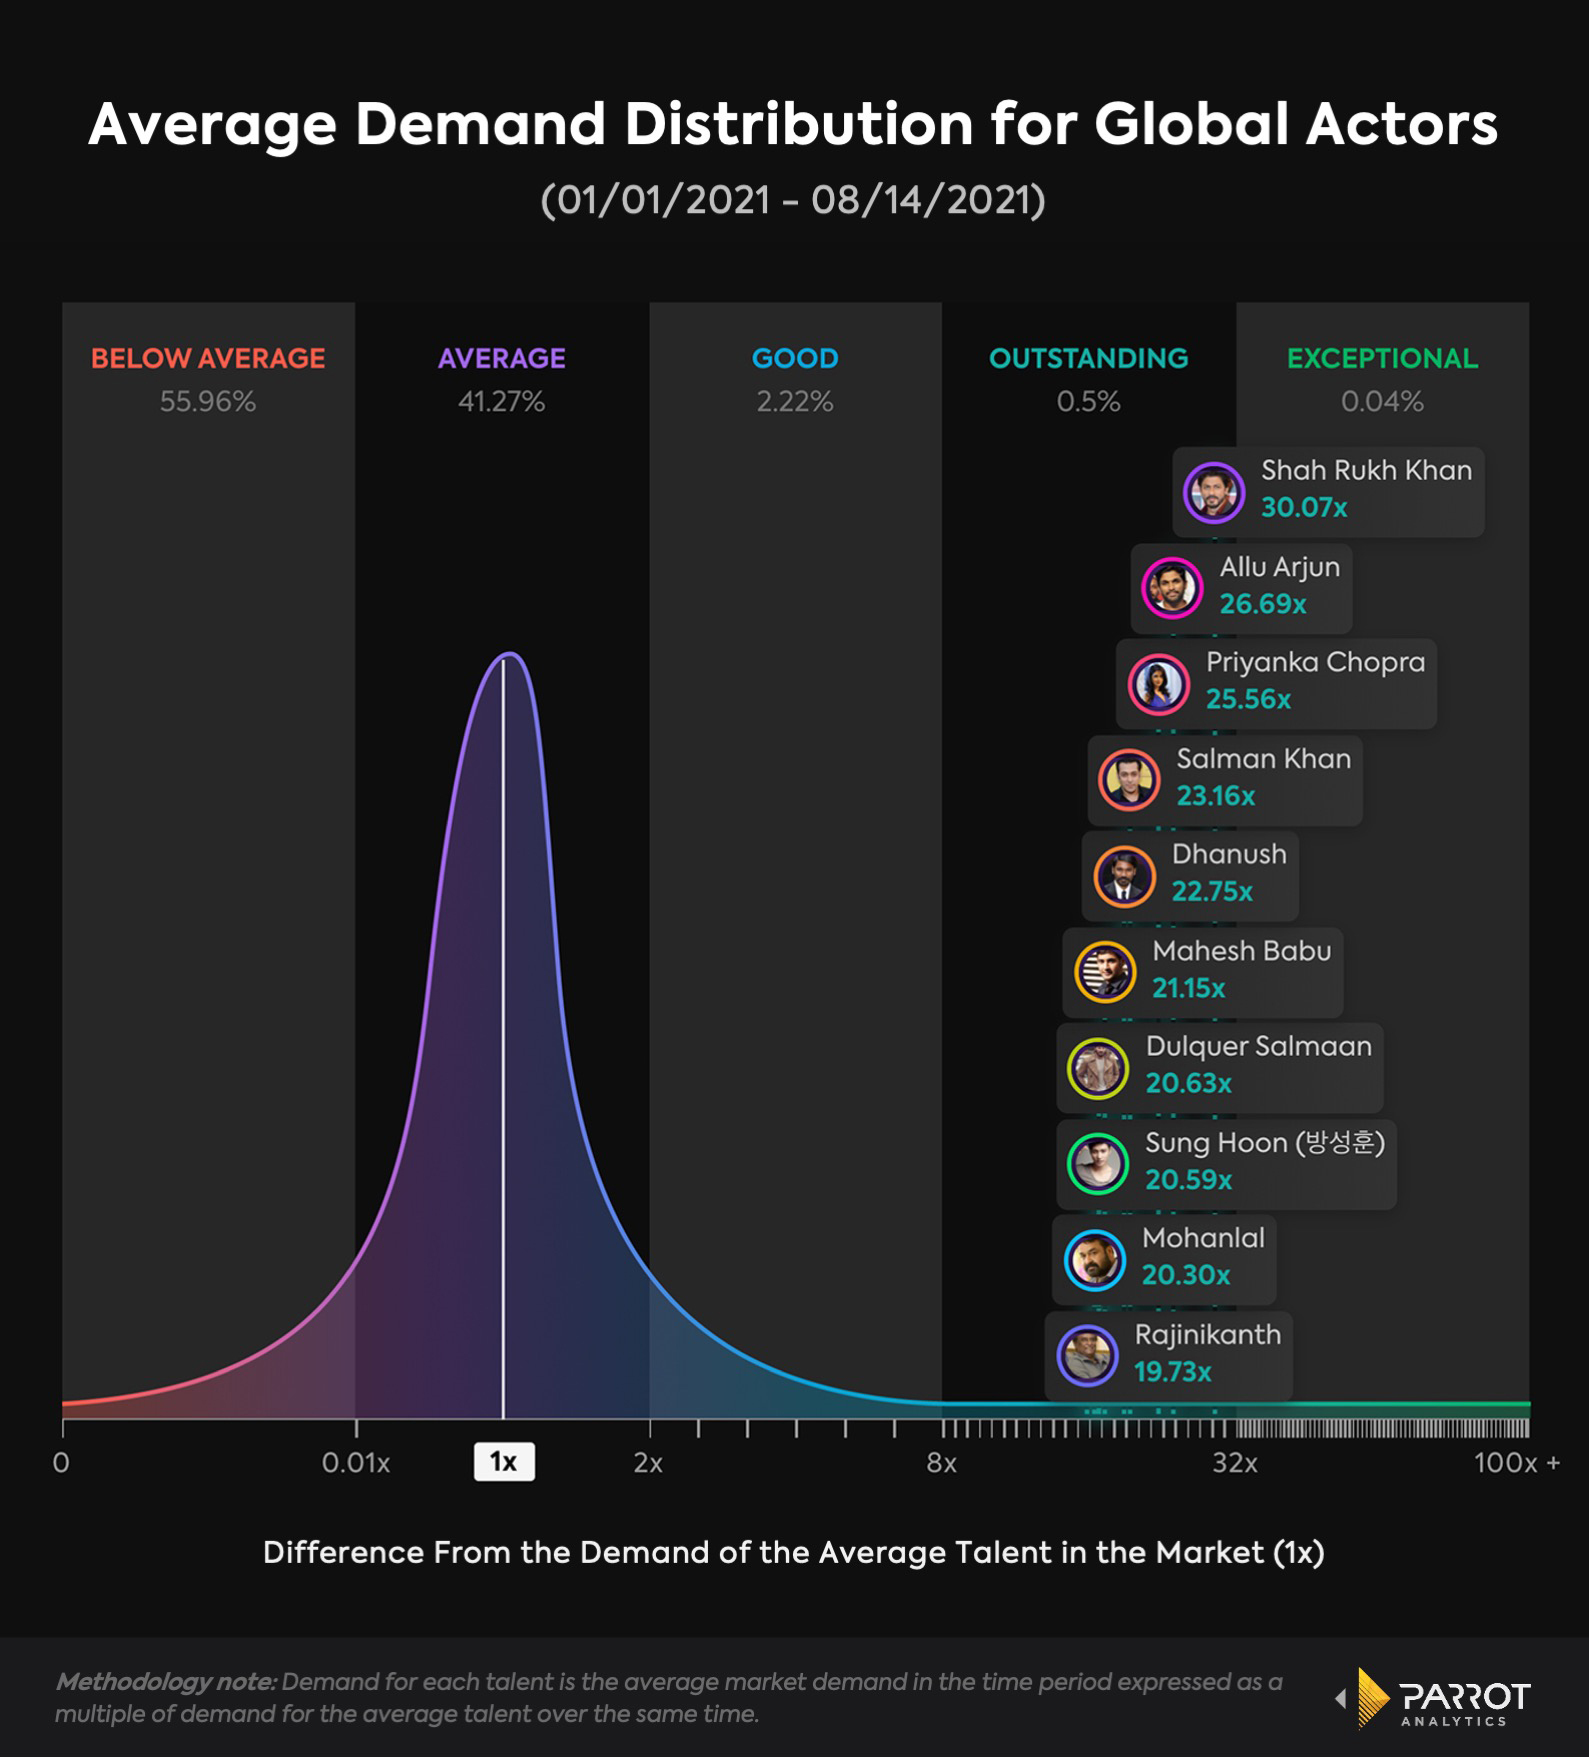 Parrot_Average Demand Distribution for Global Actors.jpg